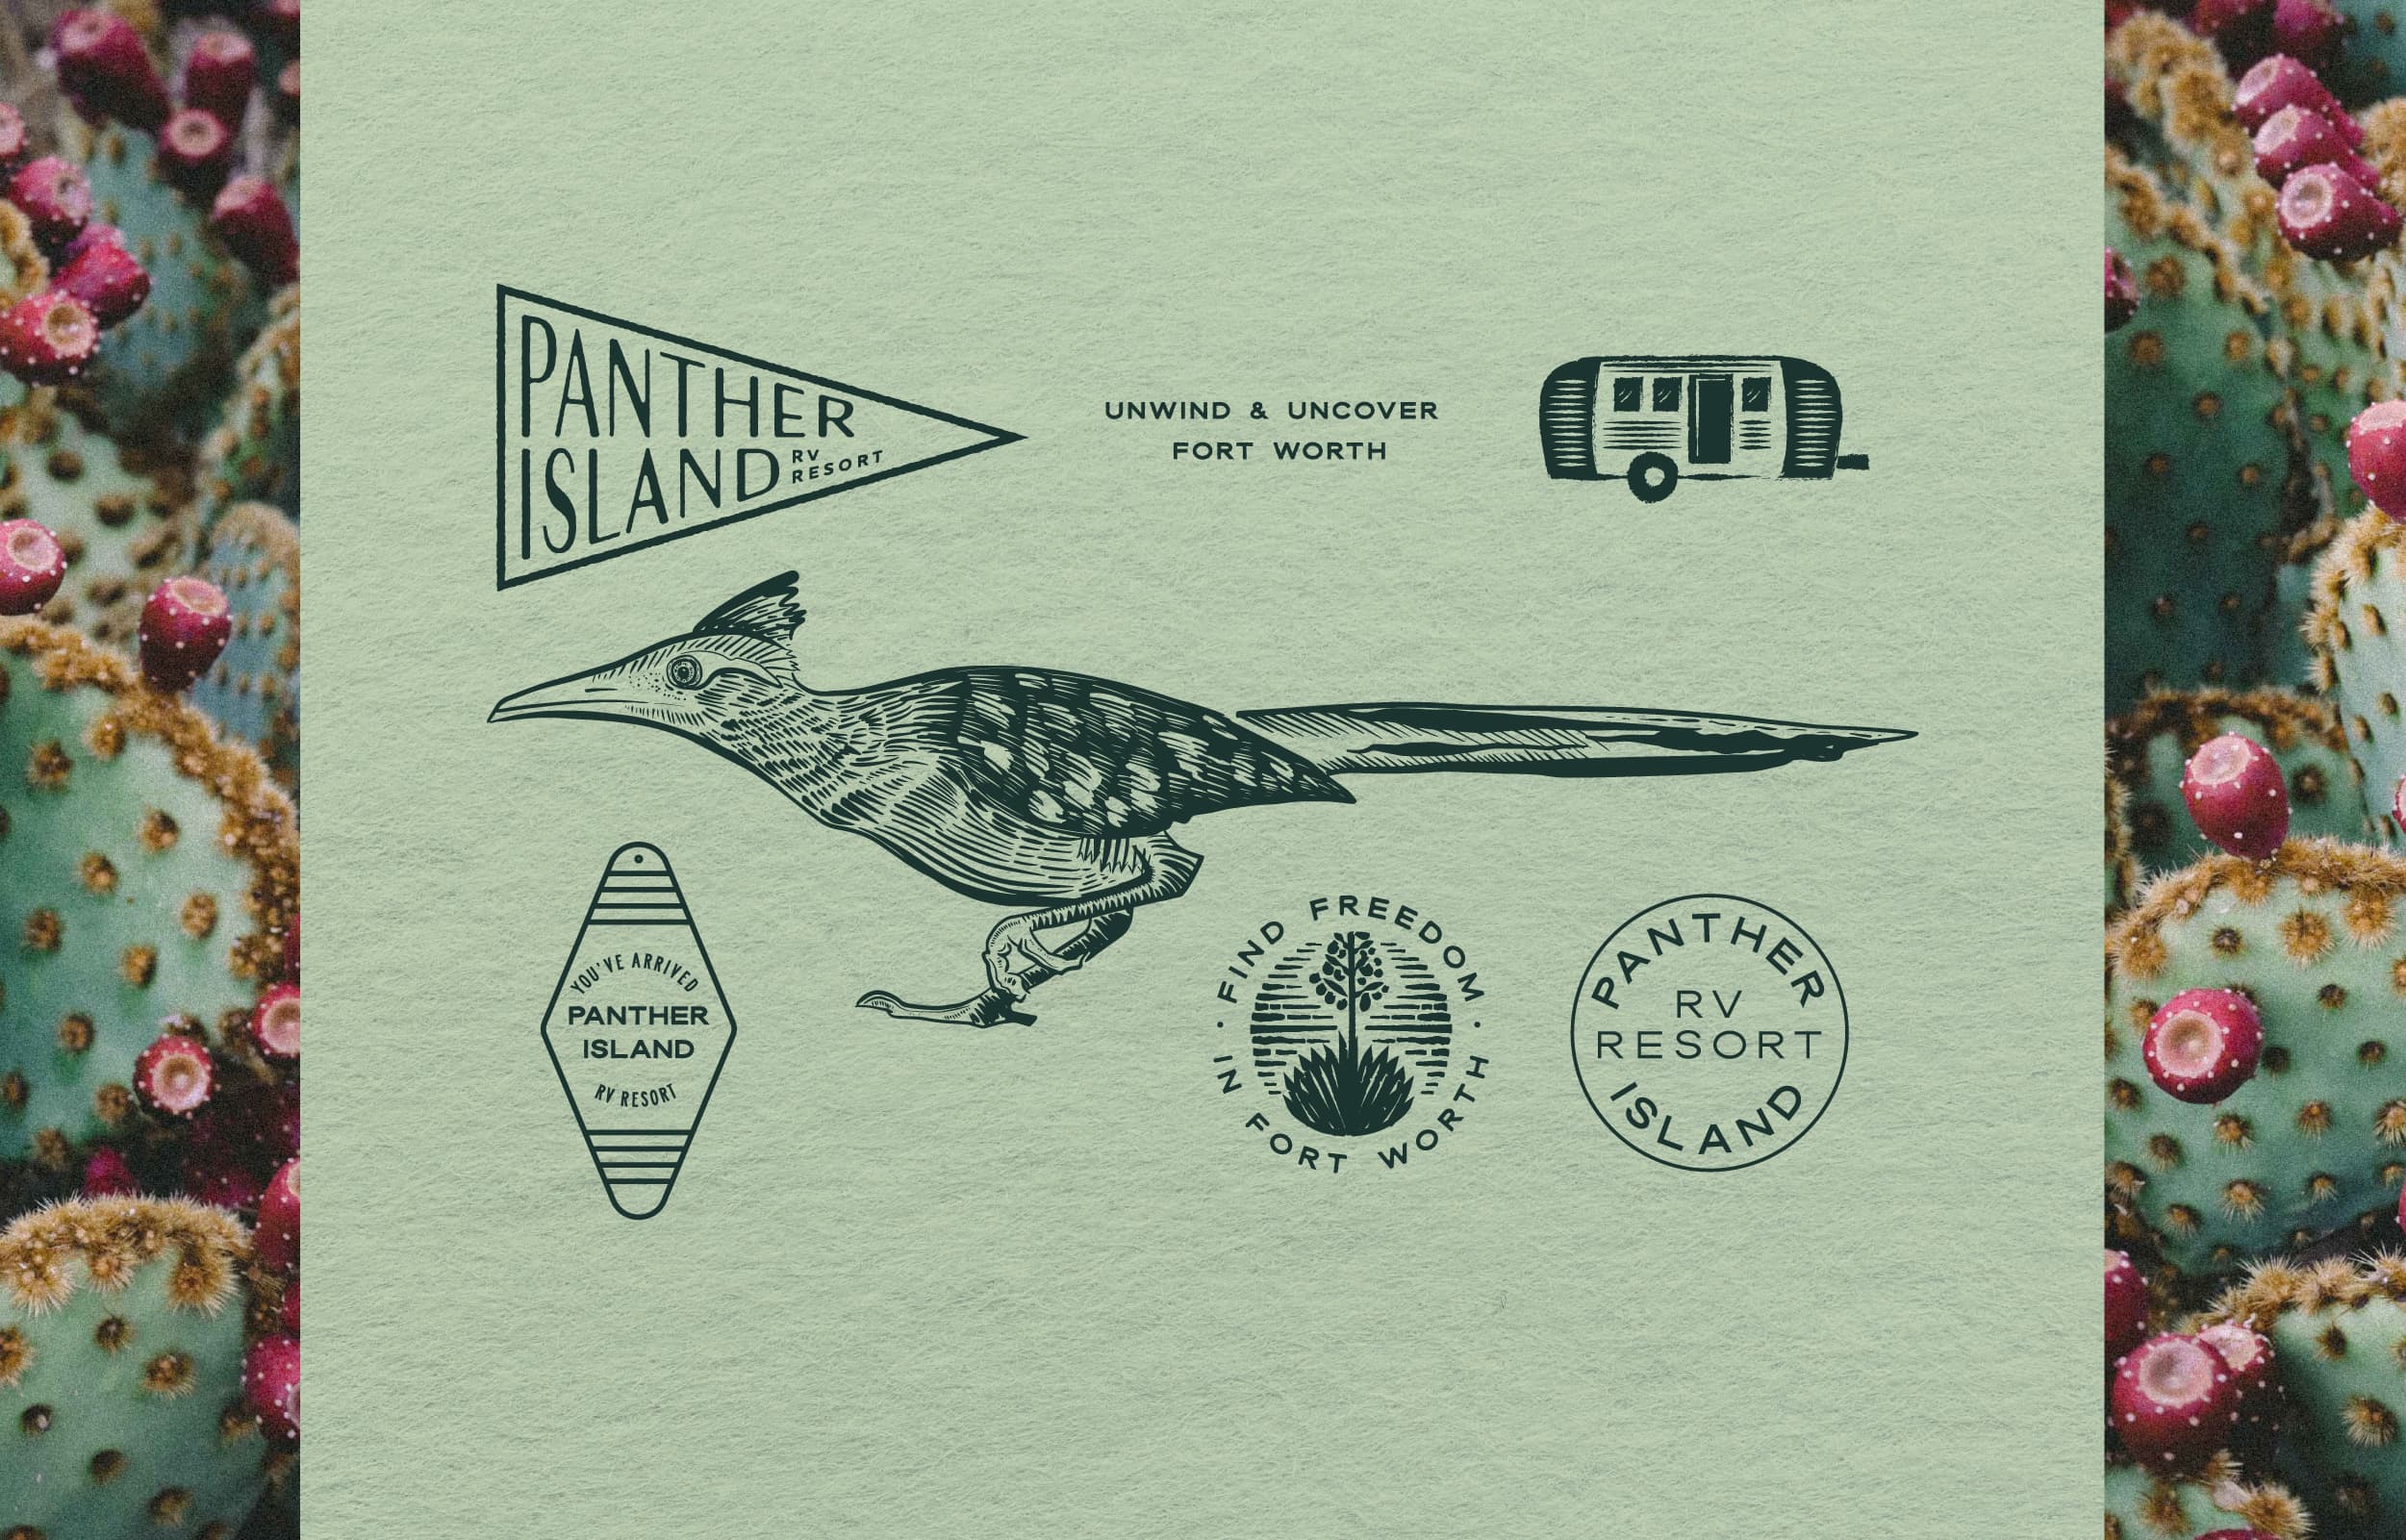 Panther Island RV Resort graphic design elements